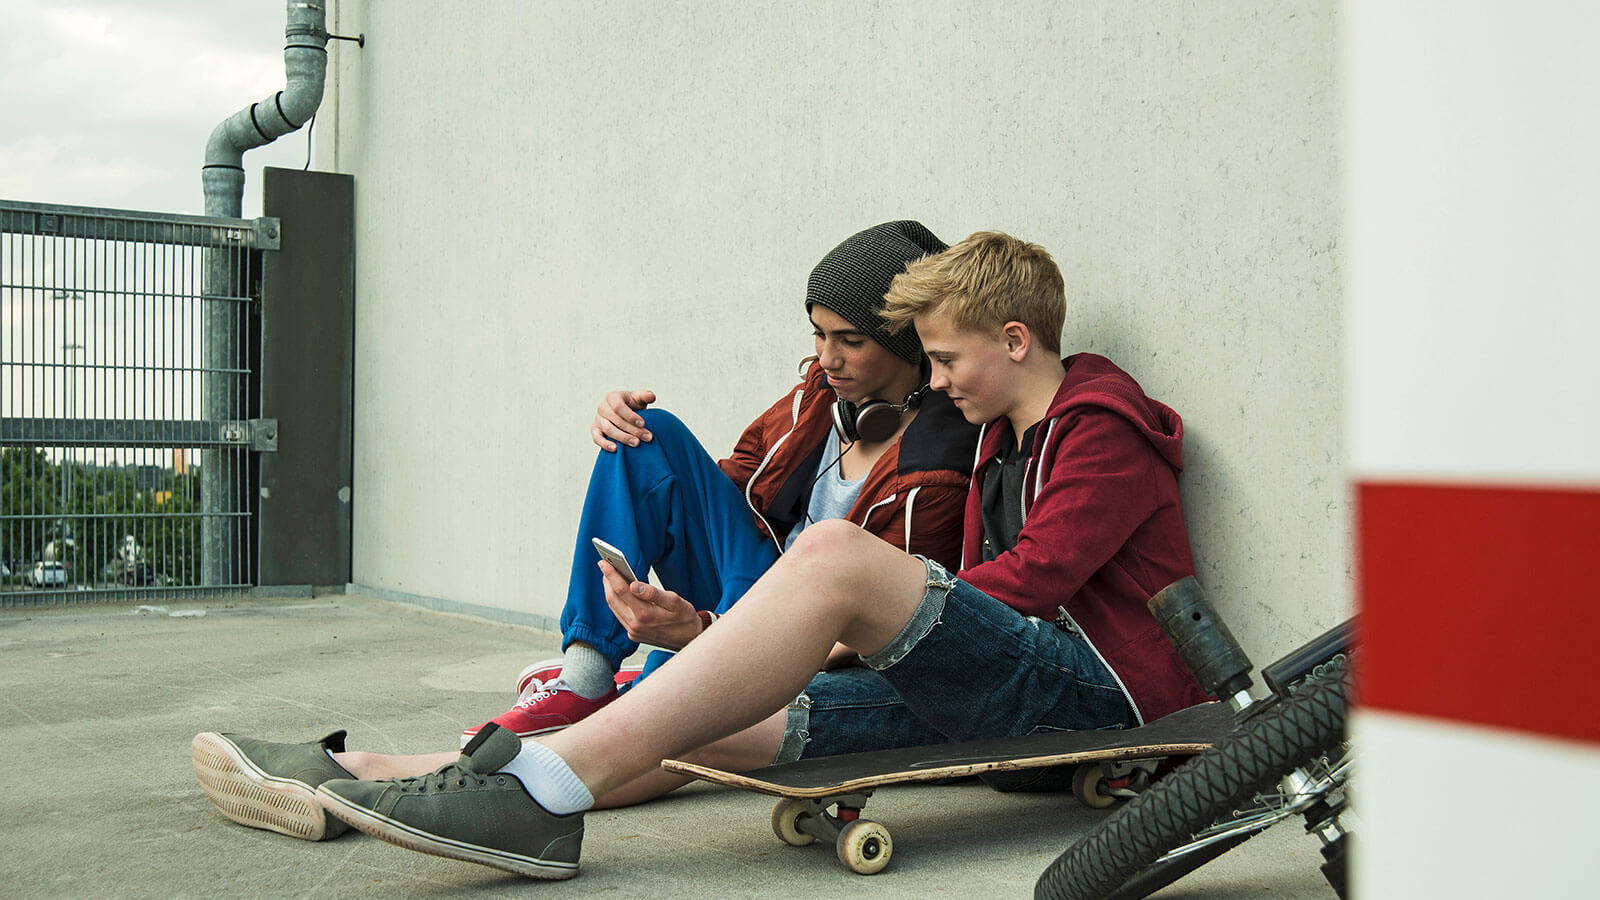 Boys sat on floor at skate park